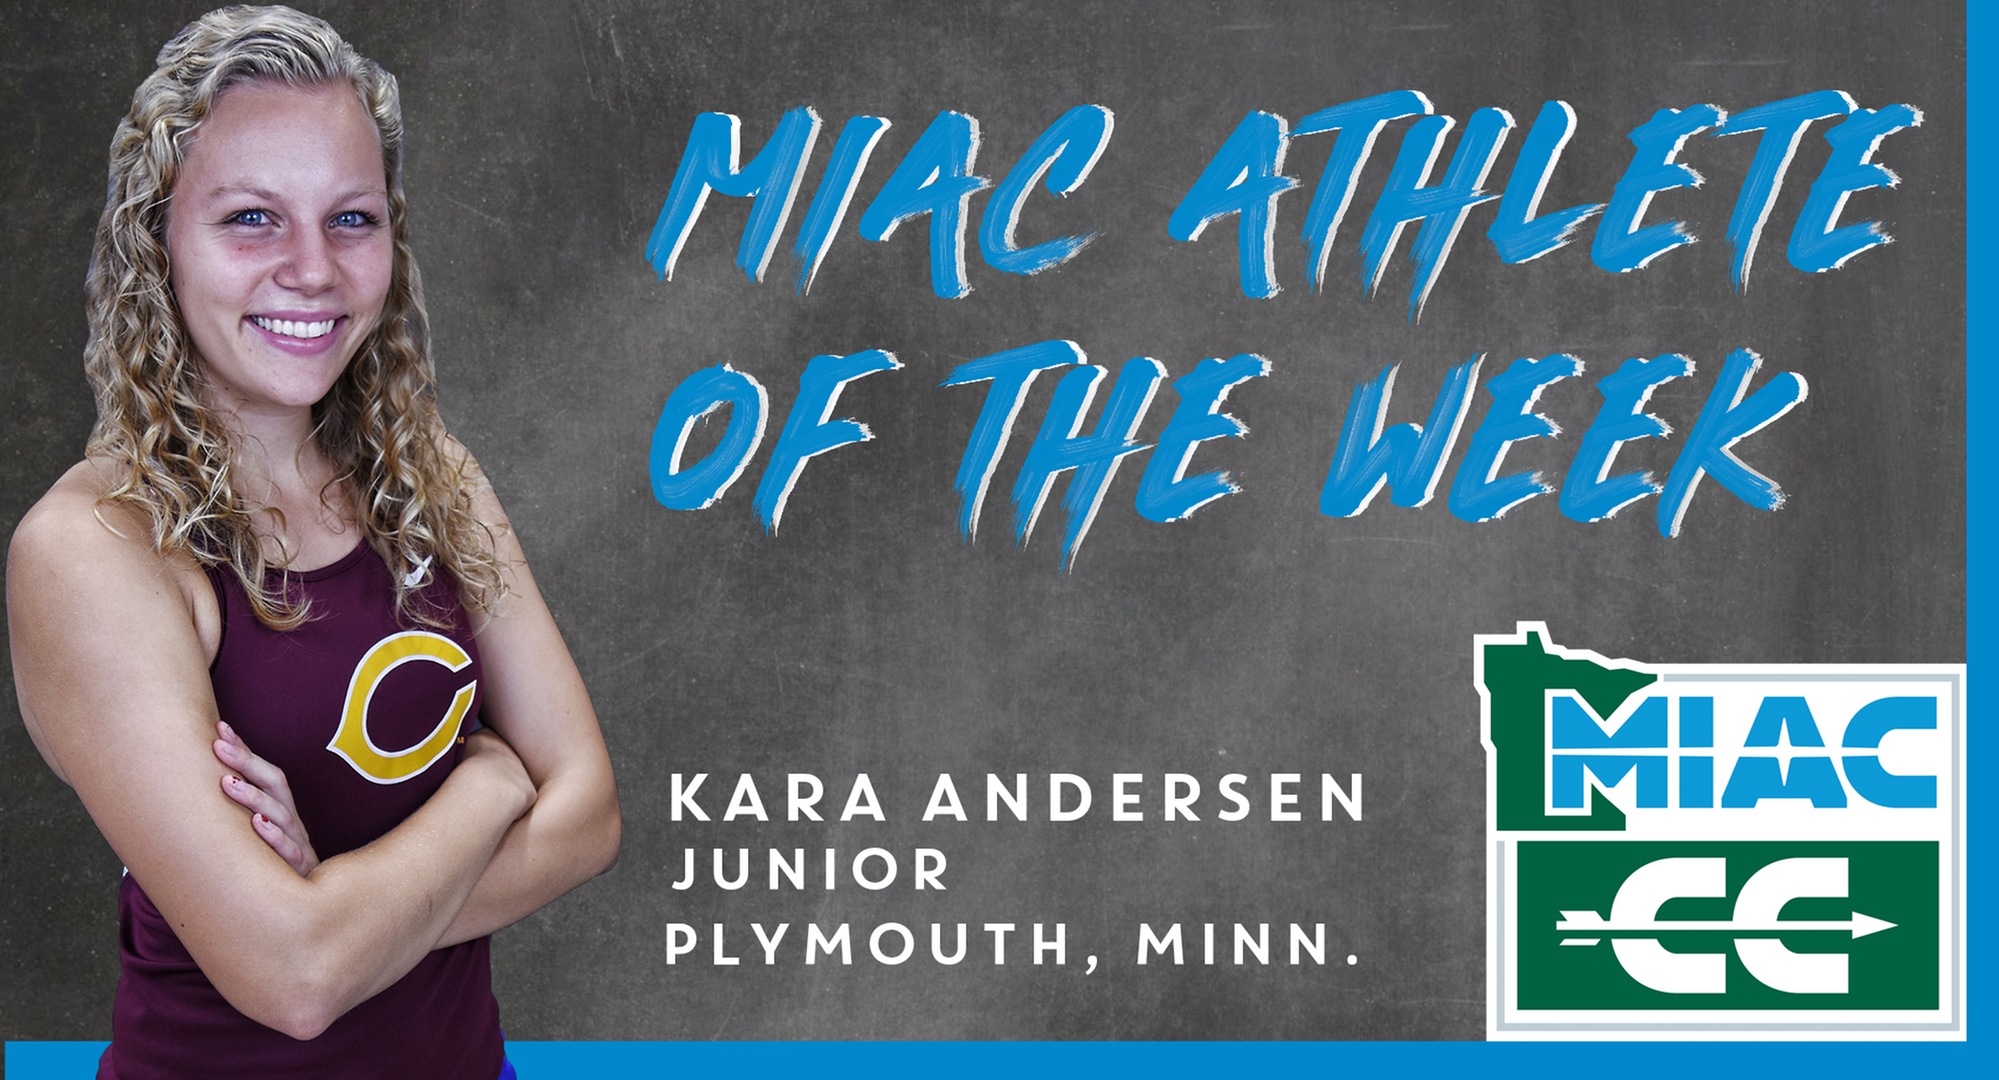 Junior Kara Andersen was named the MIAC Athlete of the Week after winning the Jamestown Invitational.